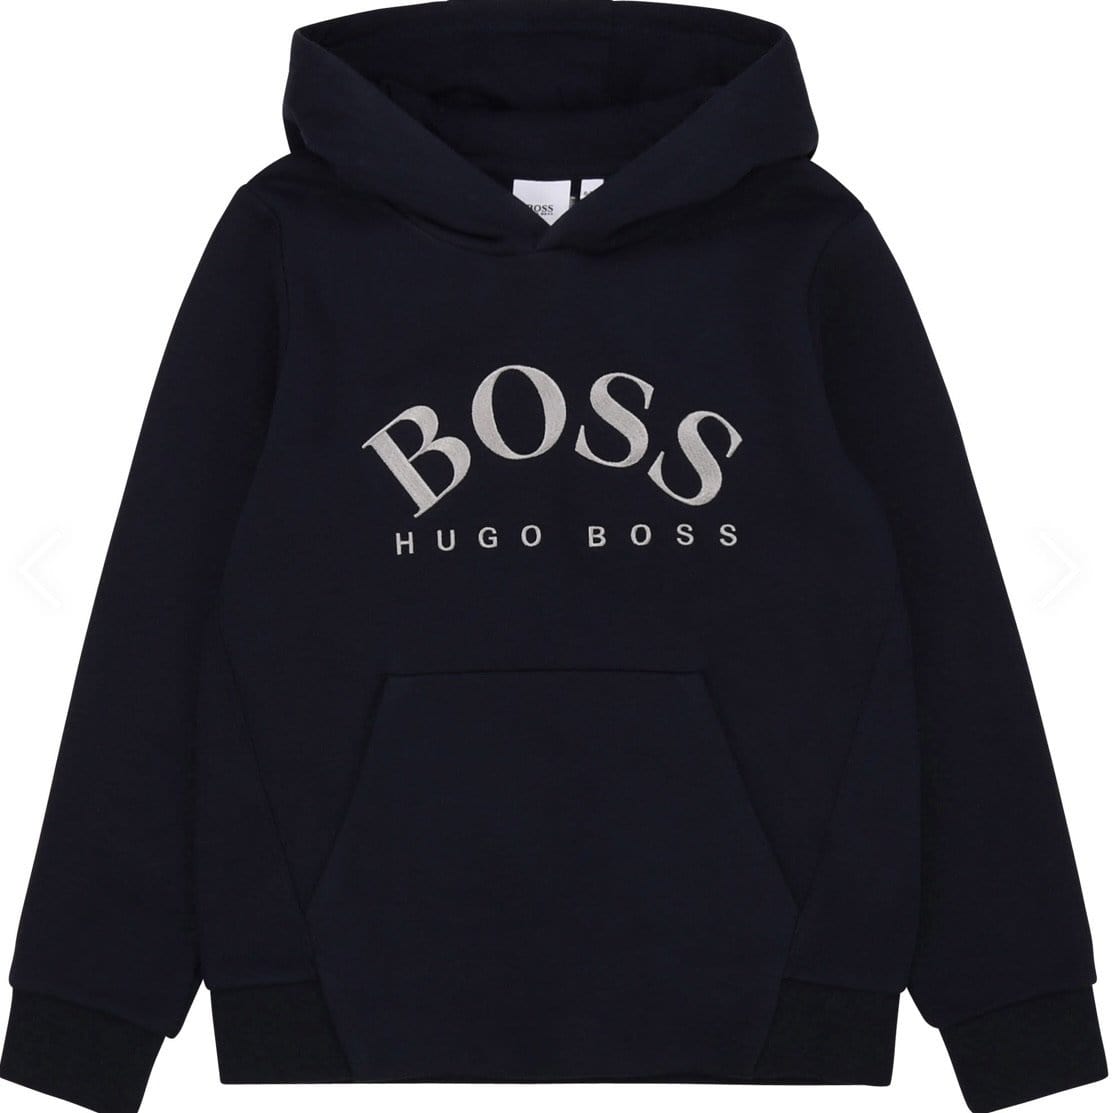 Hugo Boss - Tracksuit - Navy